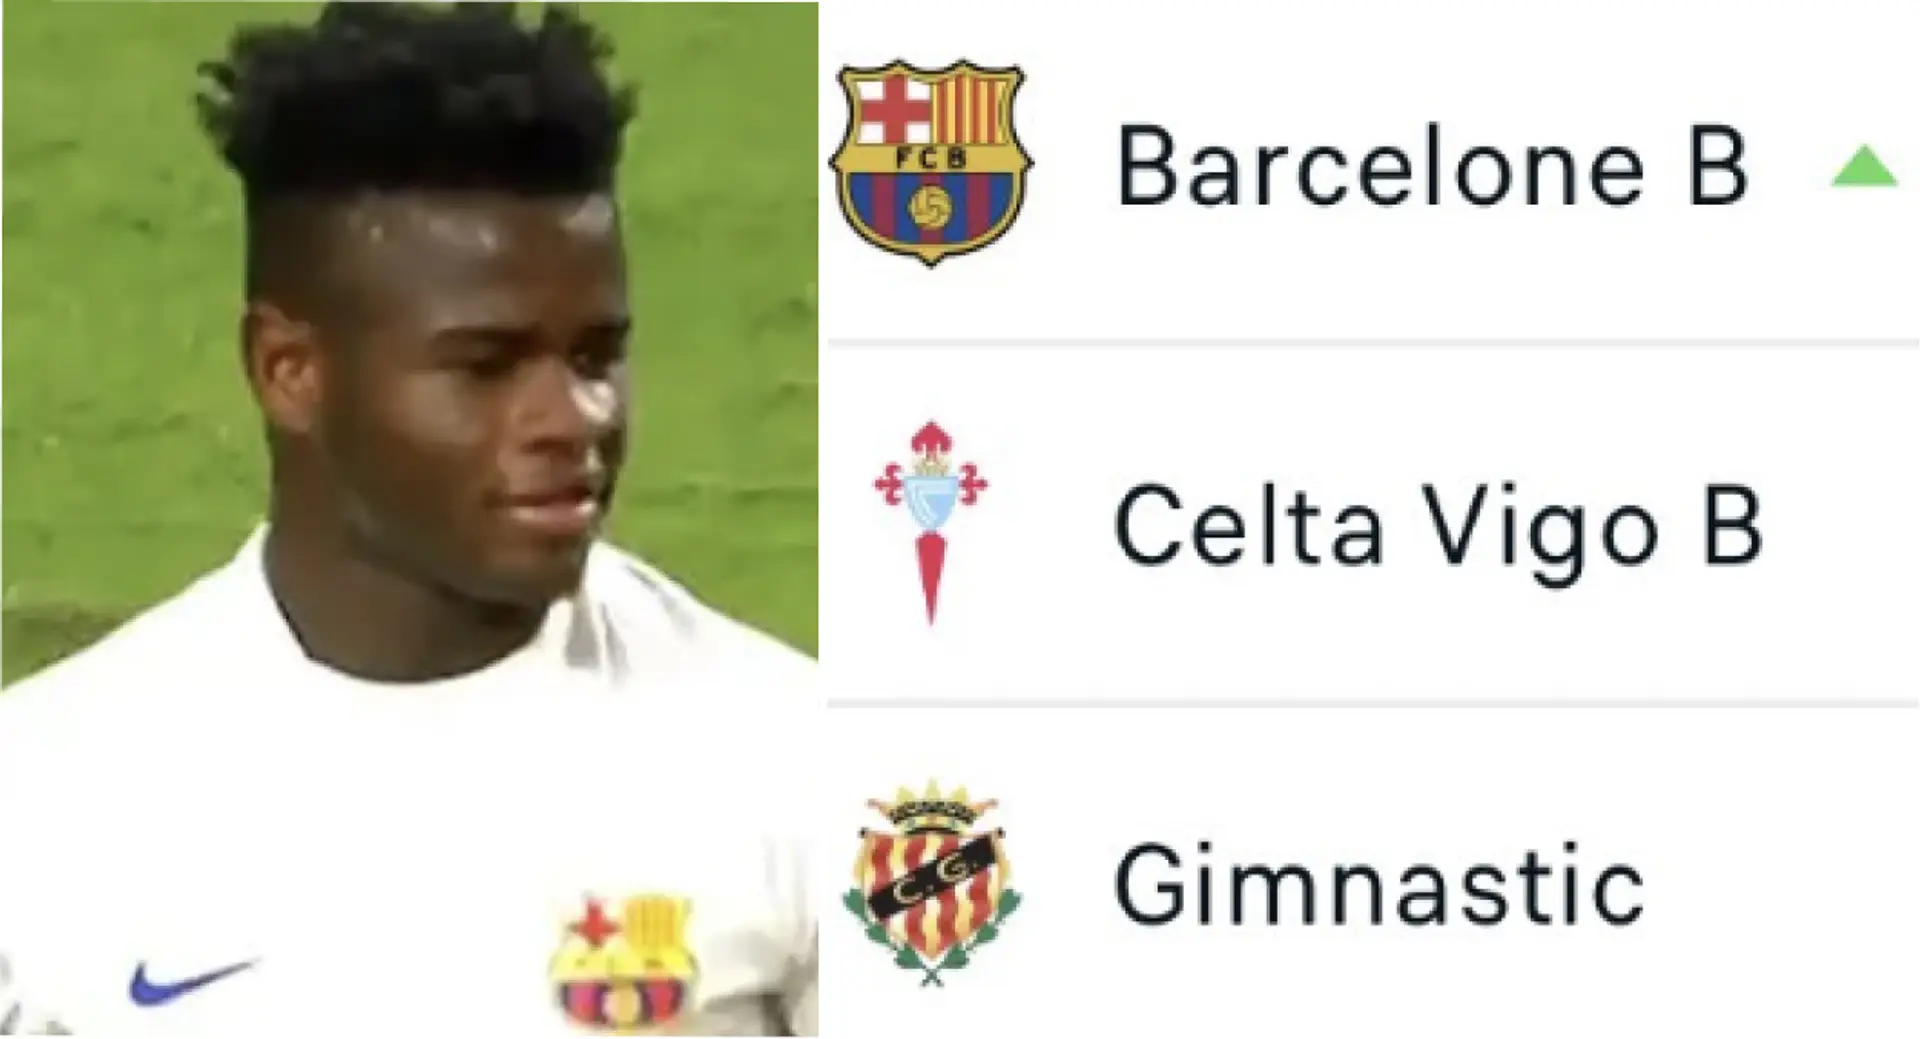 How is Barca B doing this season?